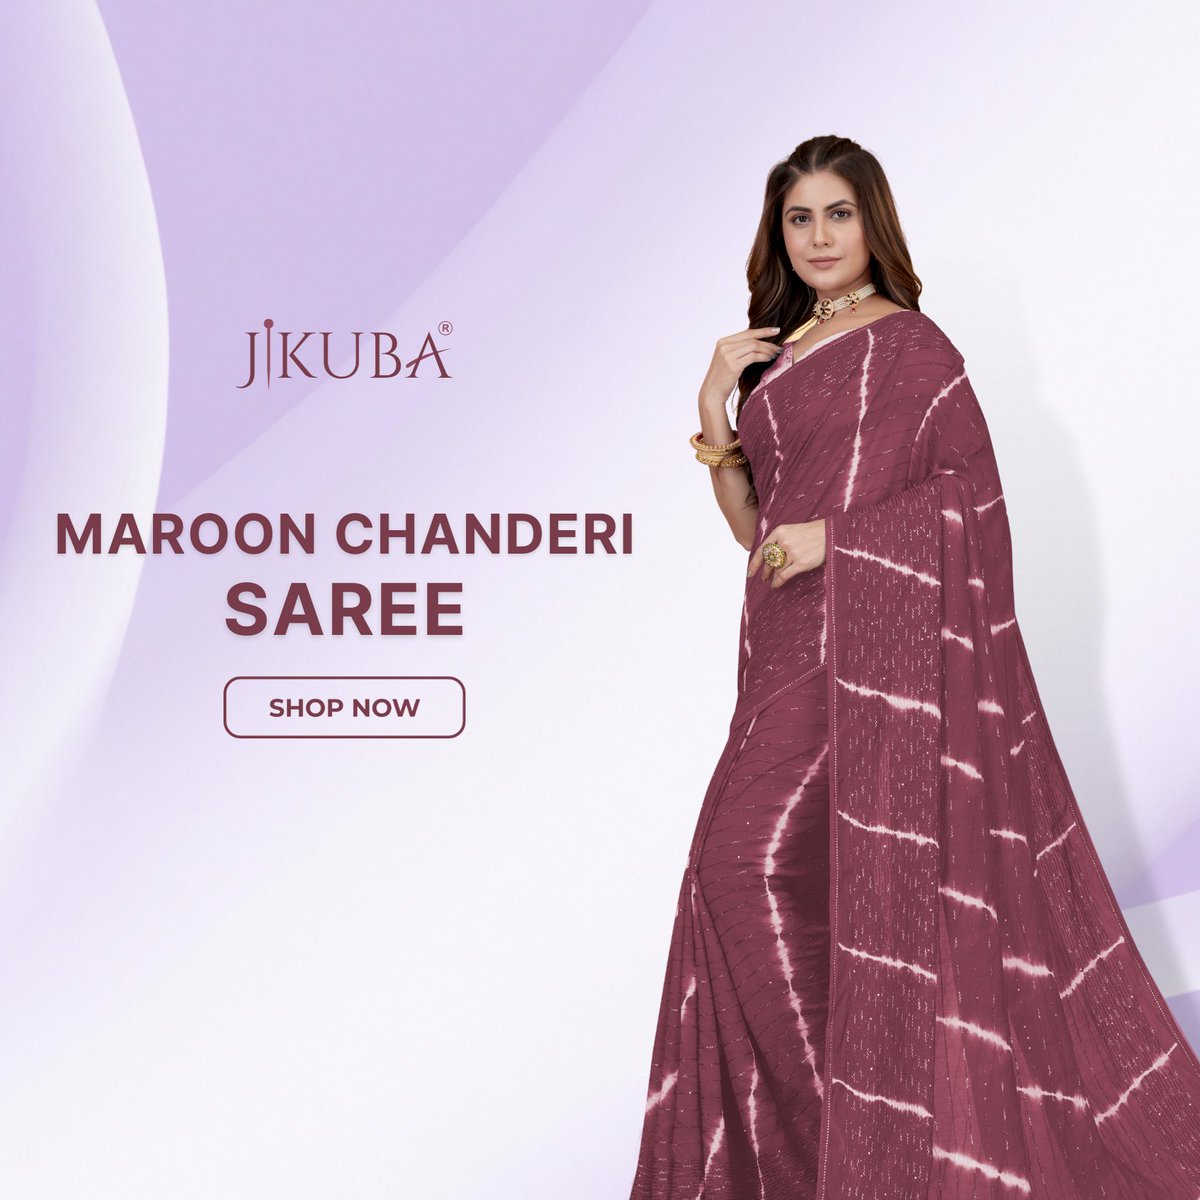 Dazzling in Maroon Sequins Chanderi Saree ✨ Elevate your style with timeless elegance! 💃👑

#MaroonSequins #ChanderiSaree #IndianEthnicWear #SareeLove #TraditionalFashion #SequinMagic #ElegantAttire #FashionGoals #InstaSaree #DazzlingDrape #SareeStyle #FestiveWear #Jikuba